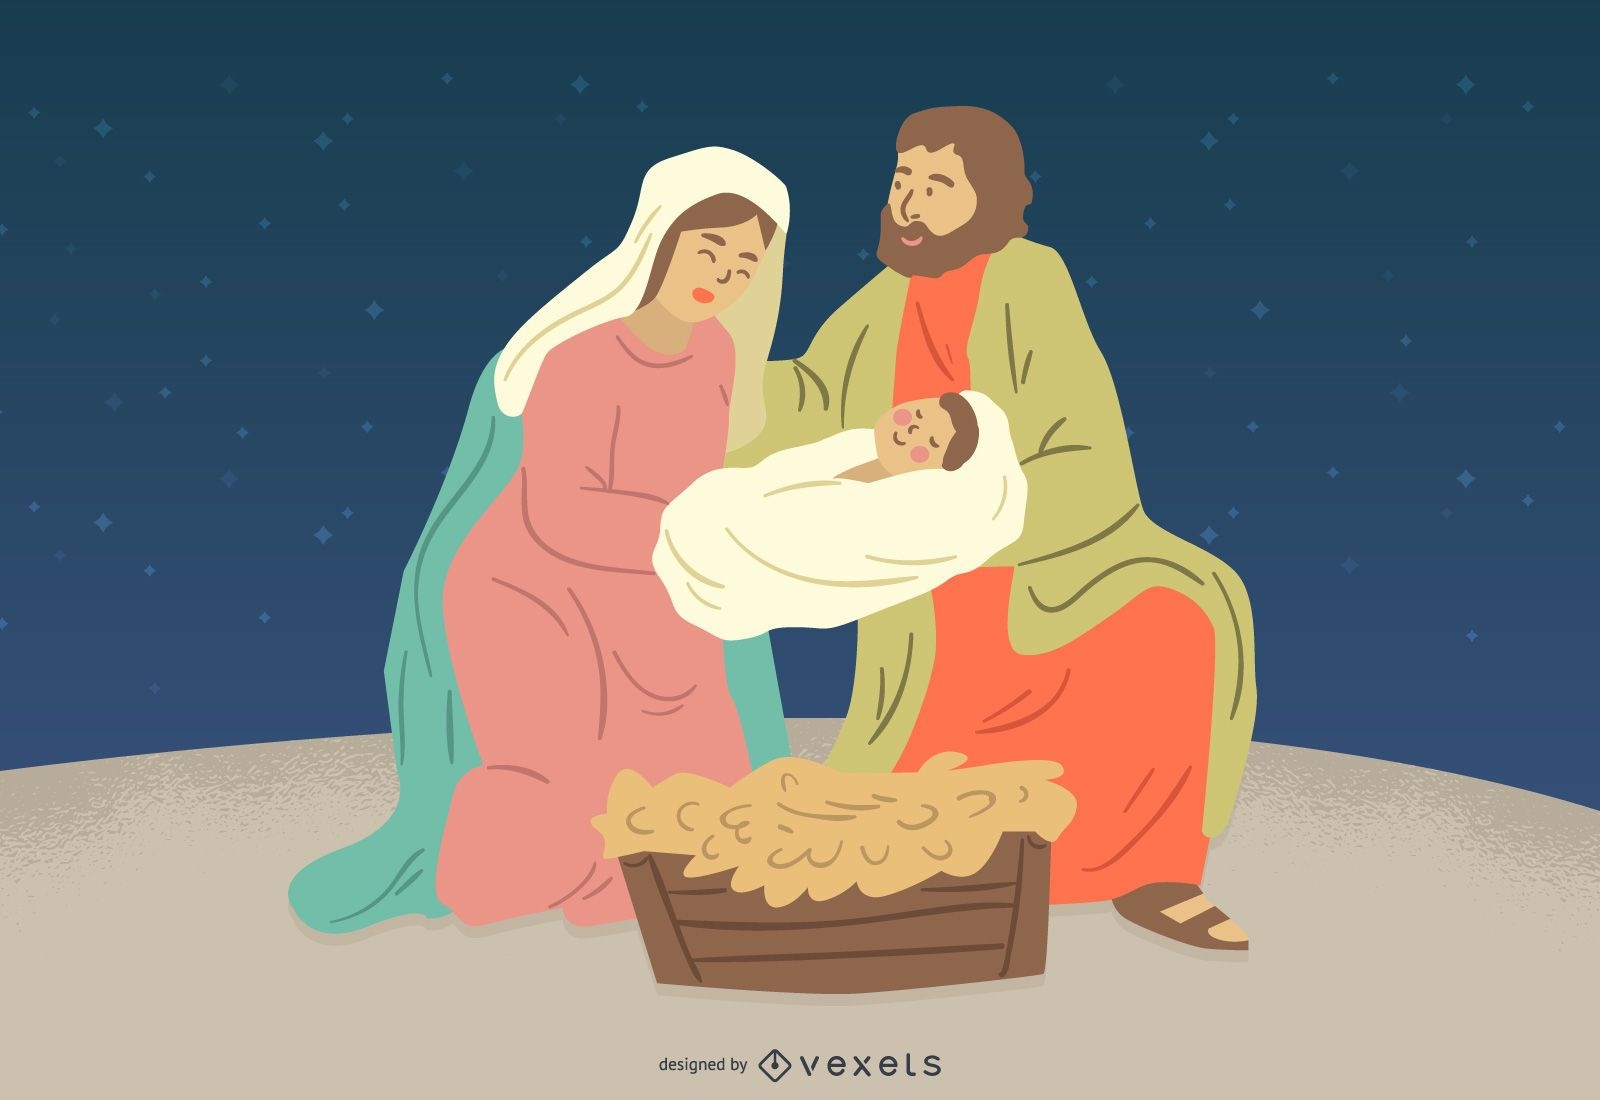 Geburt Jesu Maria Joseph Charakter Illustration